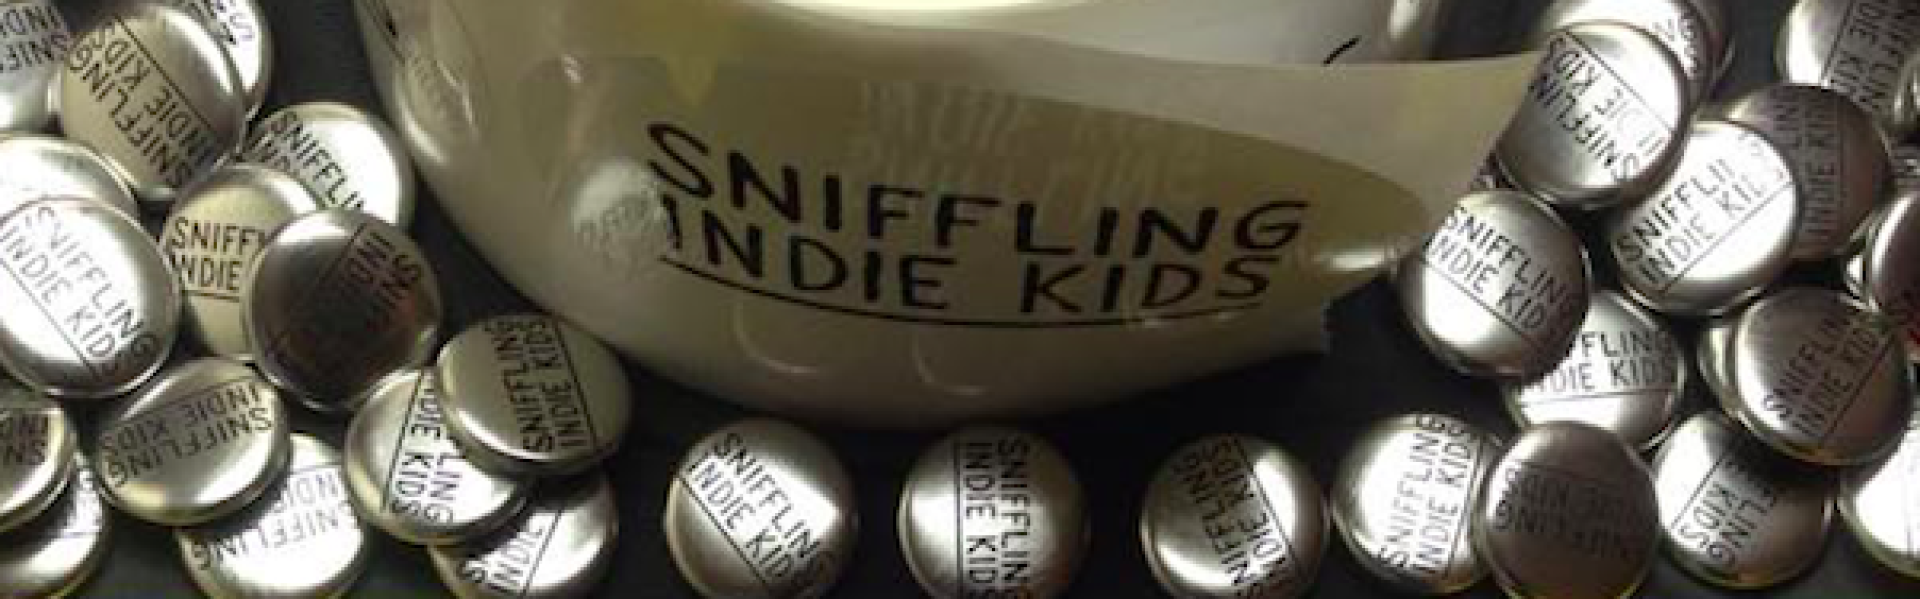 Sniffling Indie Kids